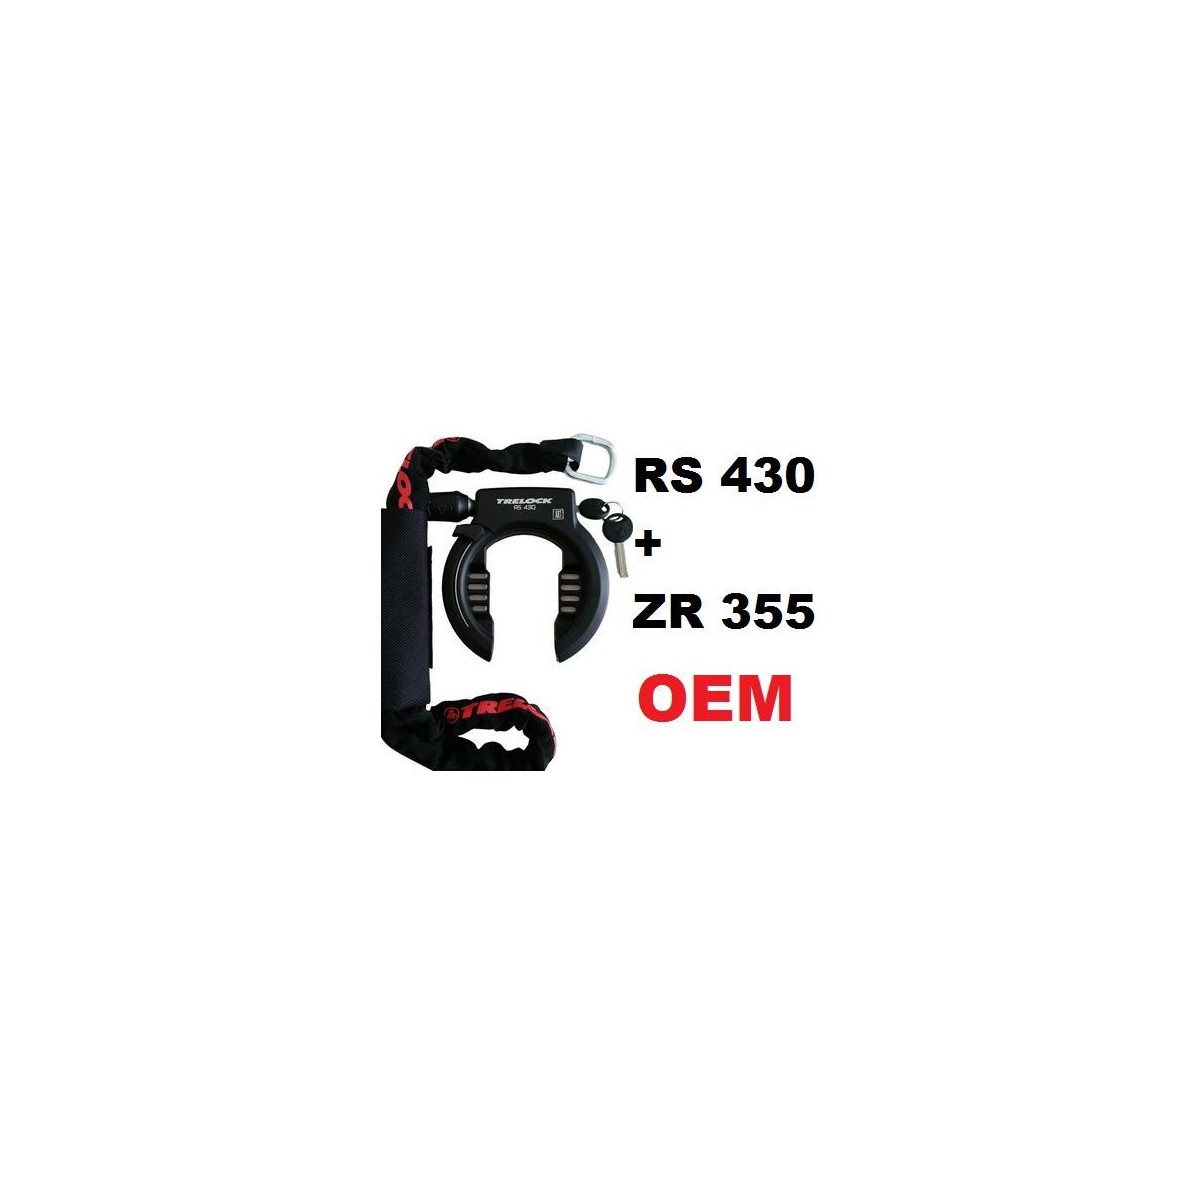 Antivol de cadre RS 430 + ZR355 oem - TAV-RS-430/ZR355